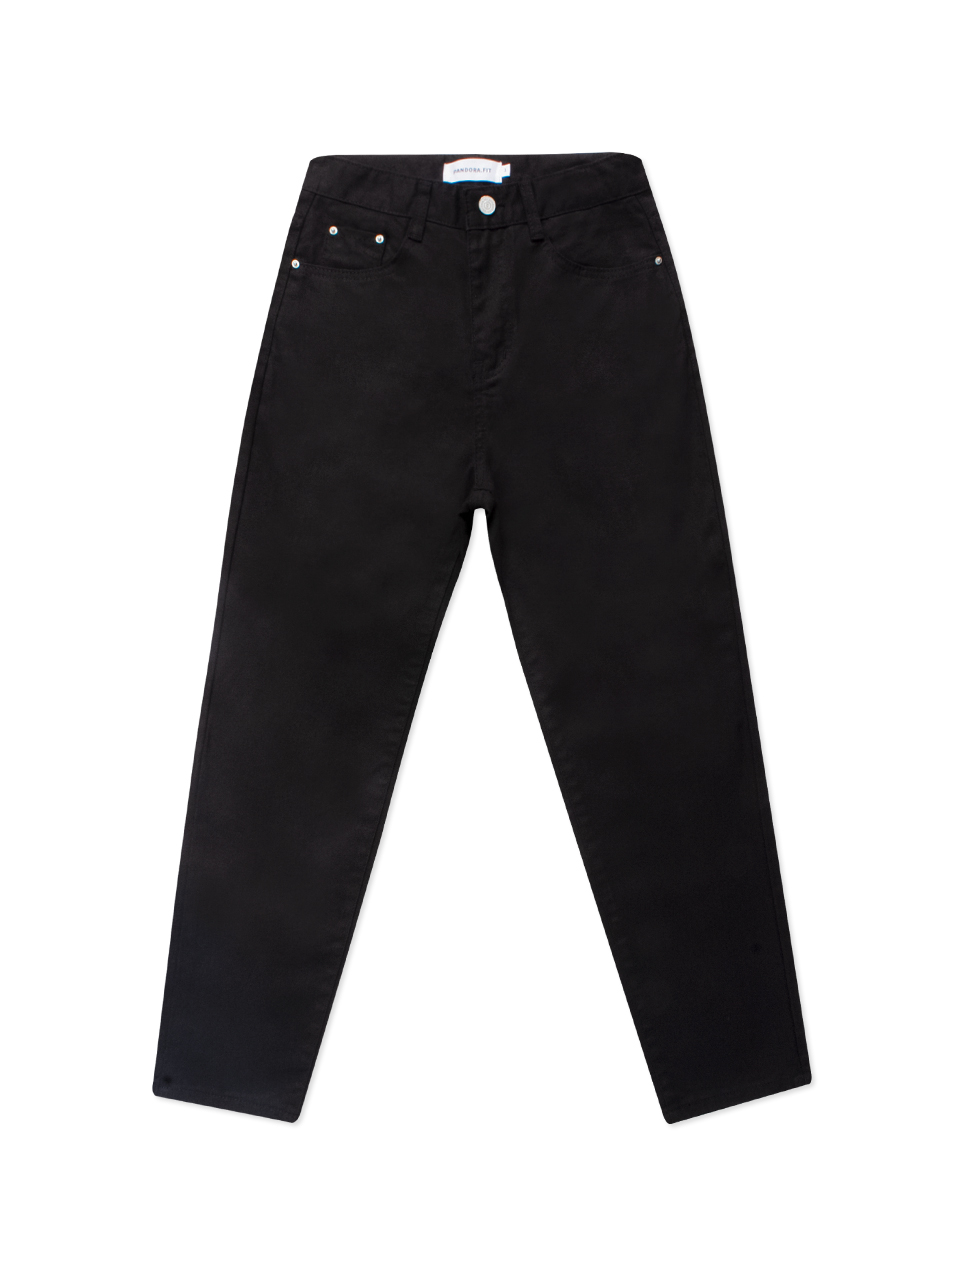 [BOY] Bermuda Jeans